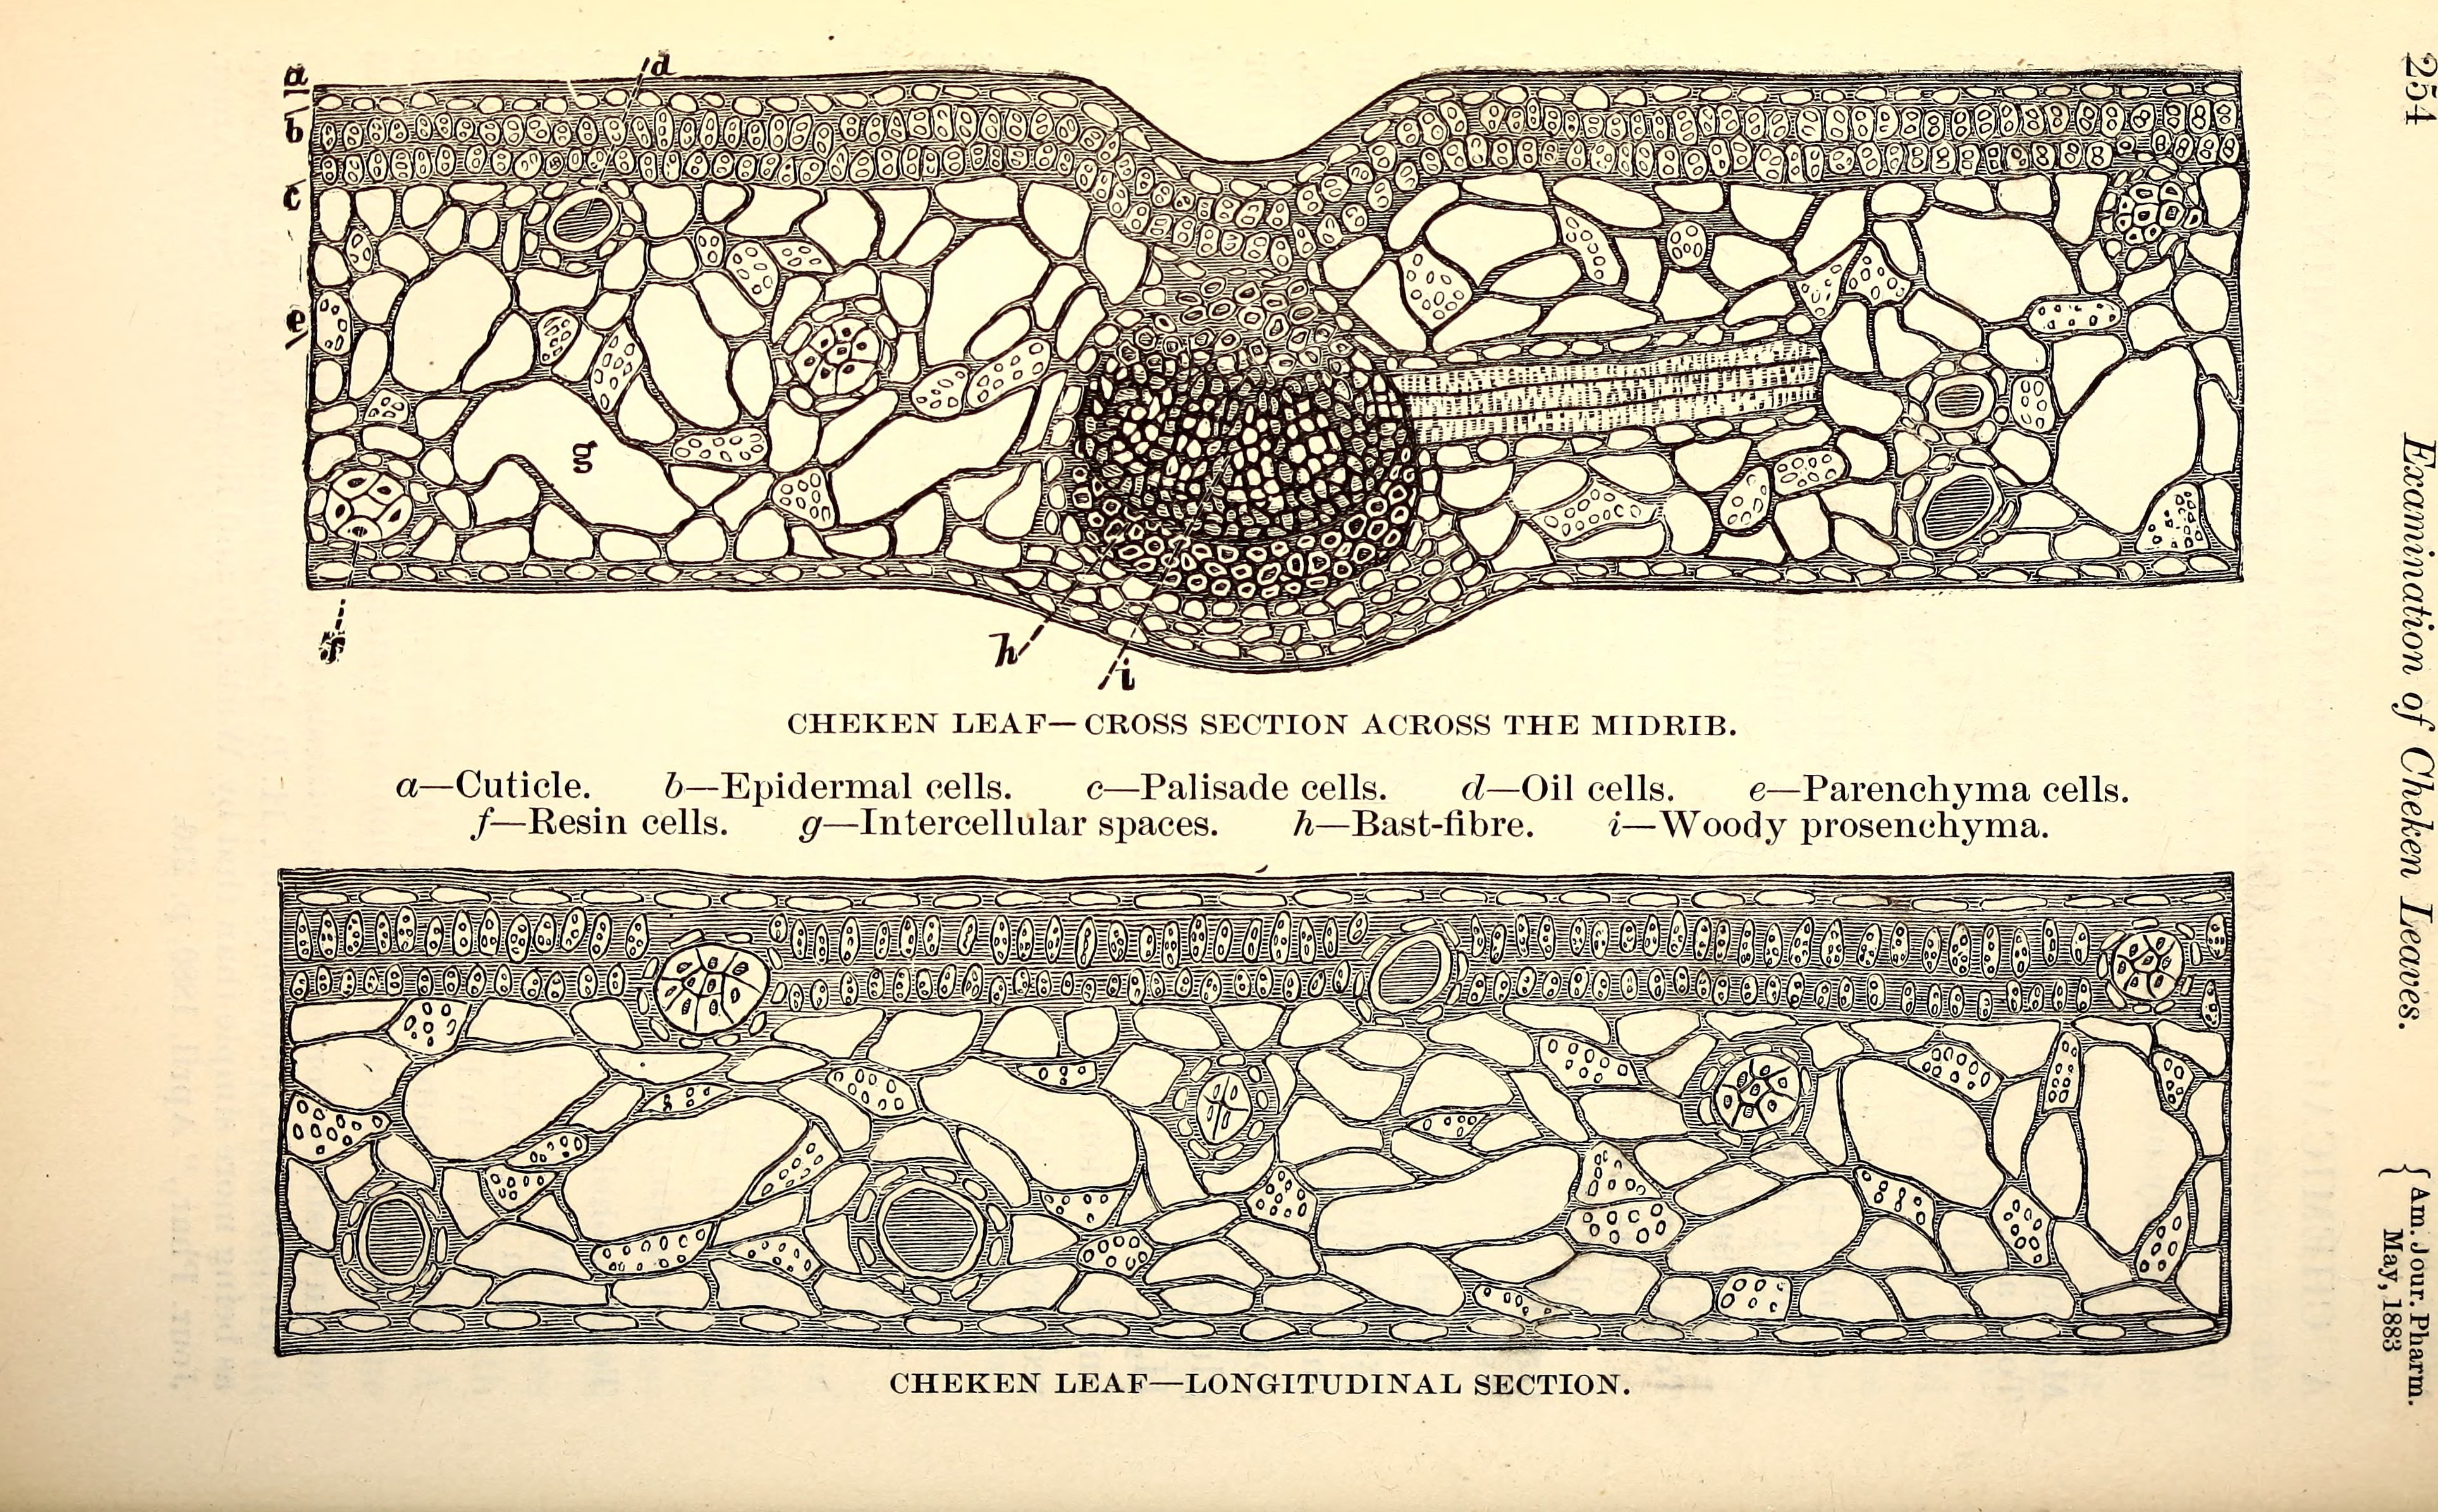 American journal of pharmacy (1883) (14771762412)